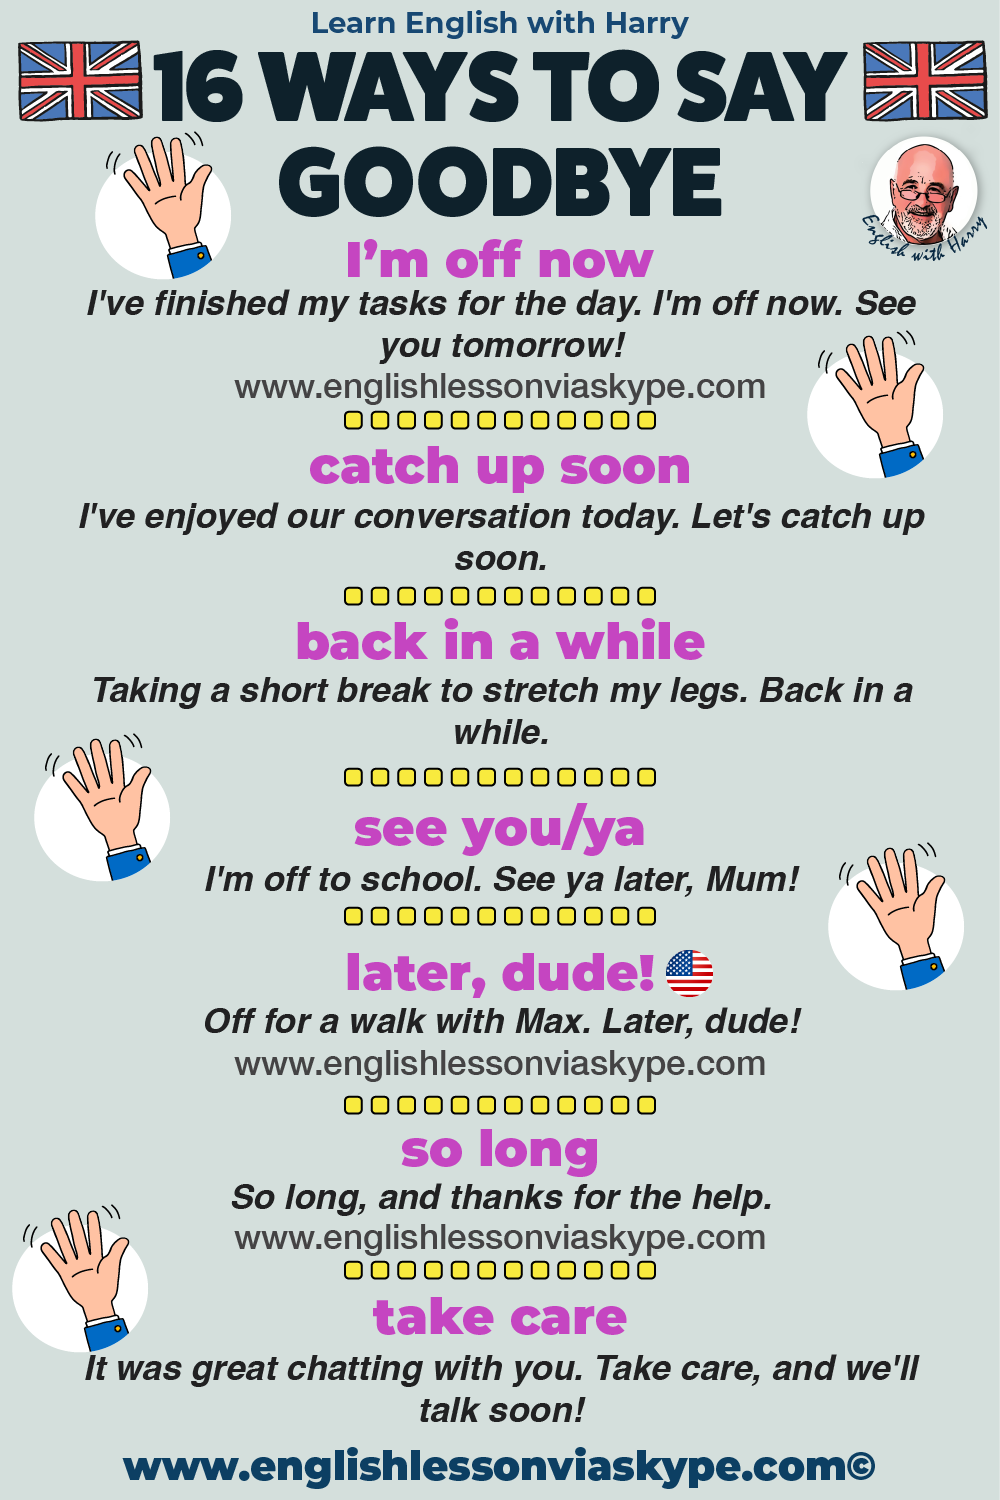 Ways to say goodbye in English. English speaking skills. Improve English speaking skills. Upgrade your vocabulary. English grammar rules. Improve English speaking. Advanced English lessons on Zoom and Skype. Improve English speaking and writing skills. #learnenglish